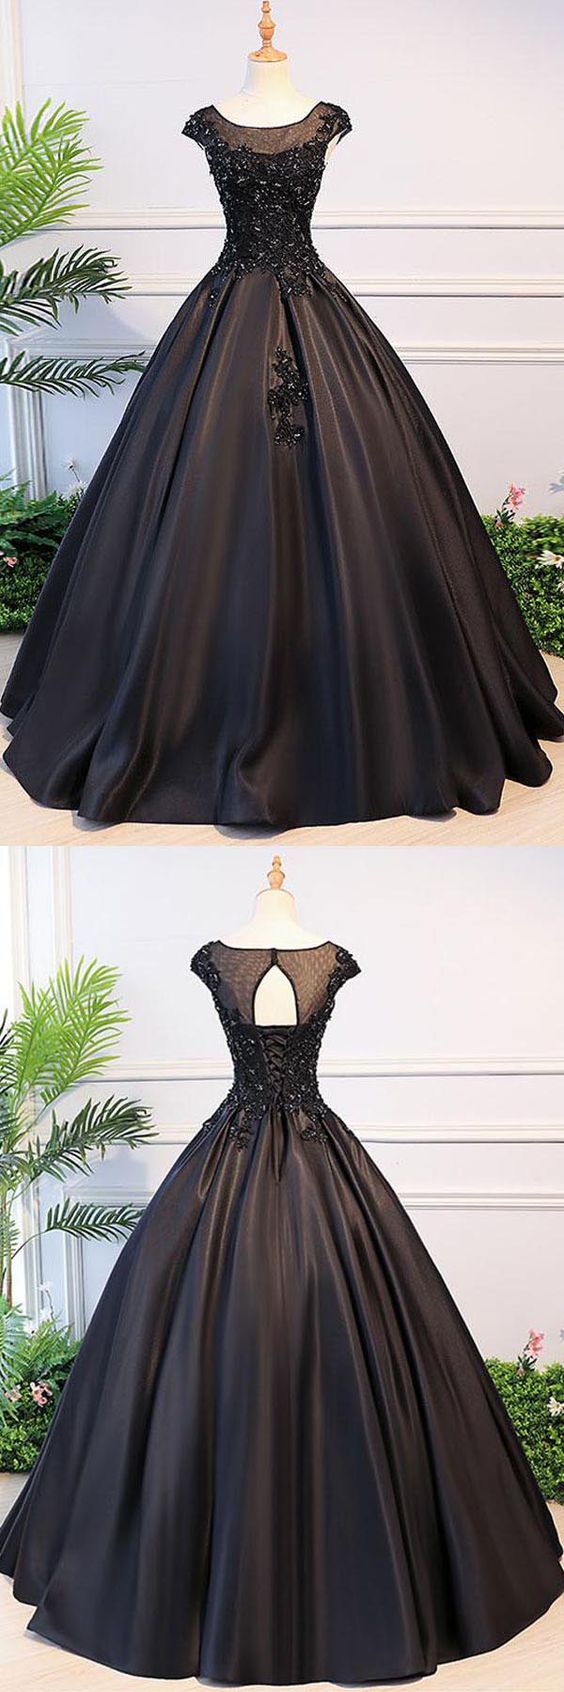 Modern Wedding Dress with Cap Sleeves and Ballgown Skirt - Martina Liana  Wedding Dresses